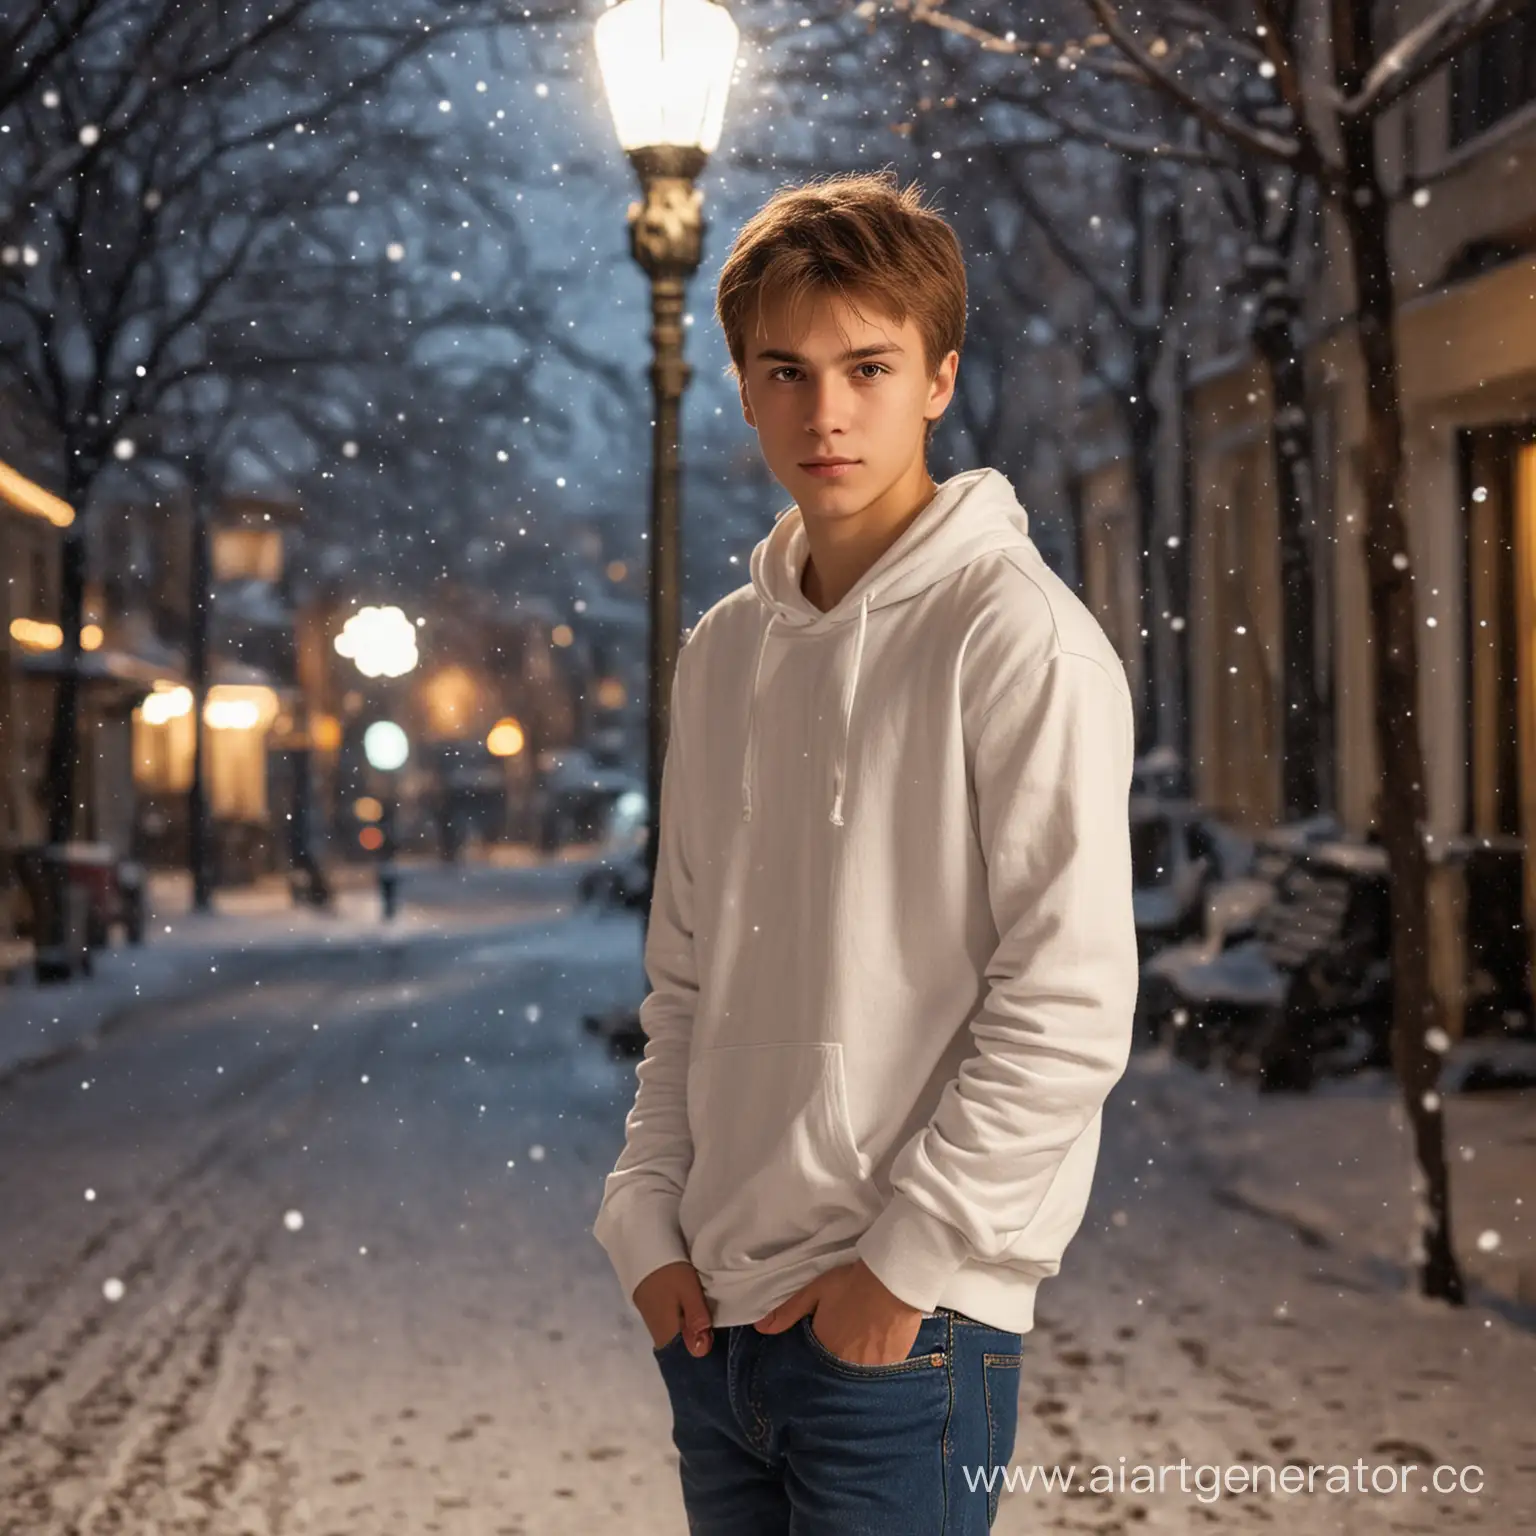 Elegant-Teenager-in-Snowfall-Evening-Russian-City-Street